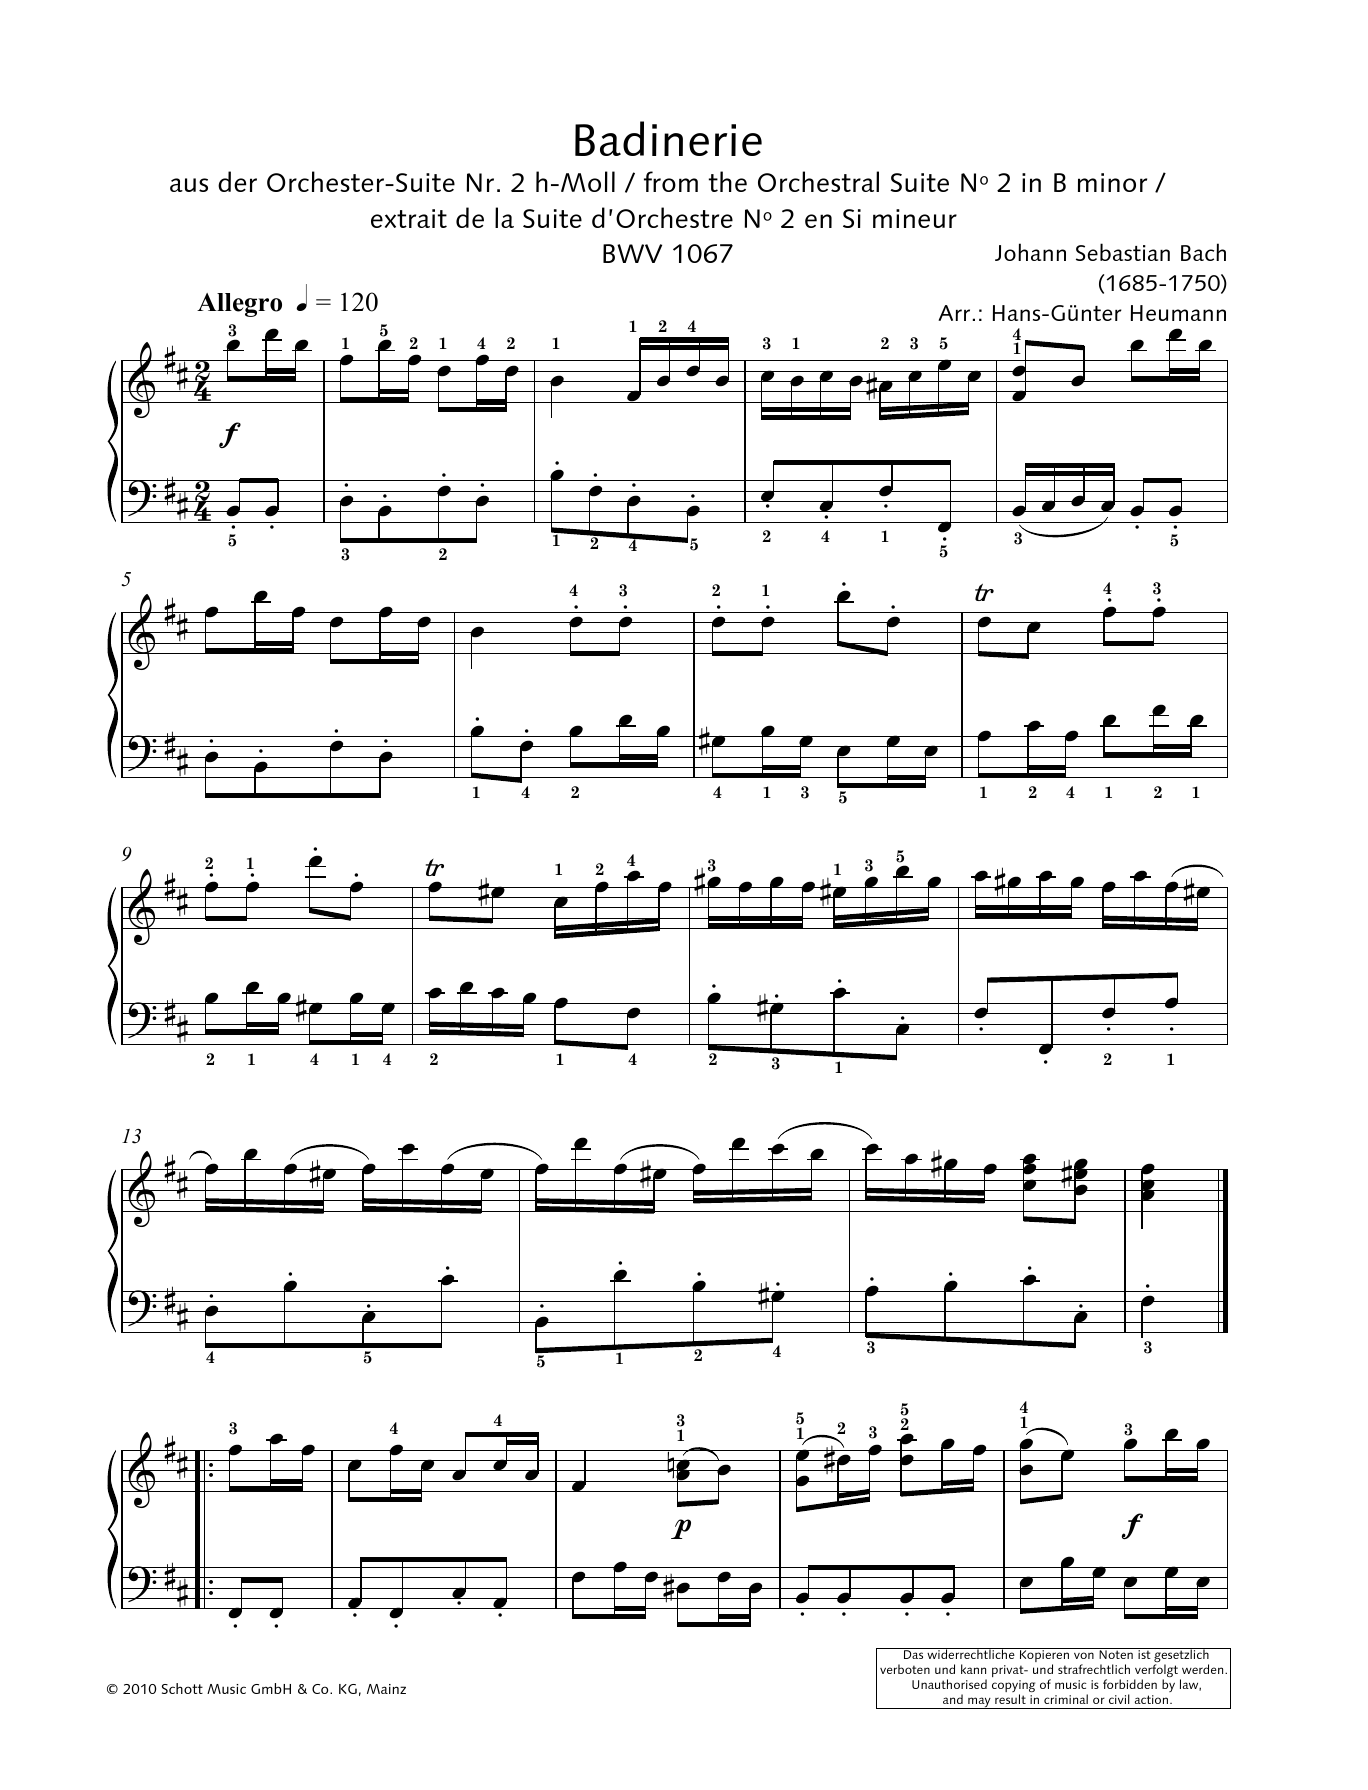 Johann Sebastian Bach Badinerie Sheet Music Notes & Chords for Piano Duet - Download or Print PDF